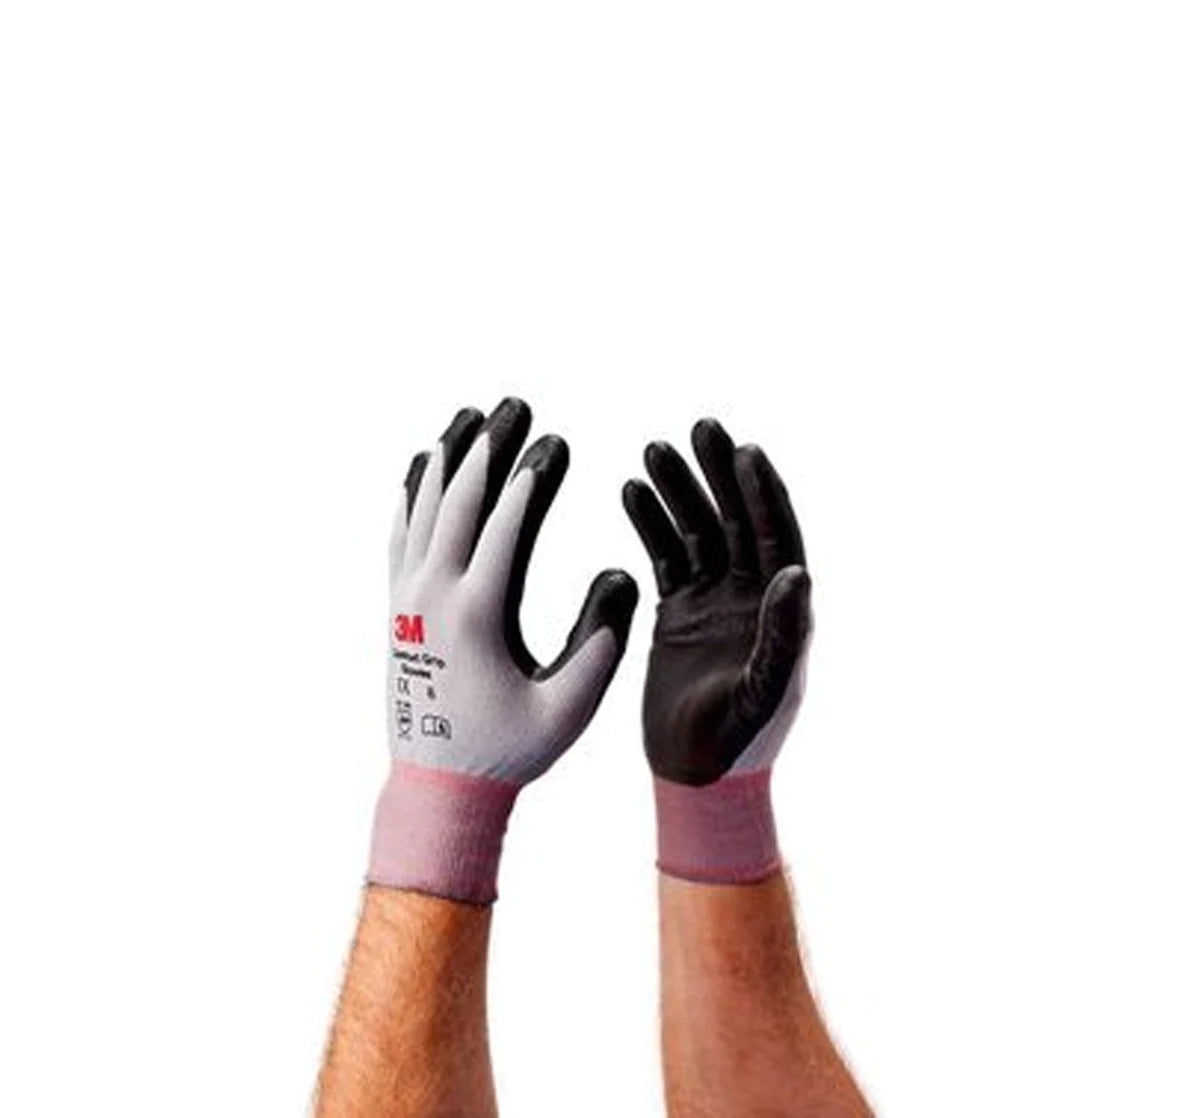 3M Comfort Grip Glove, General Use, Size L